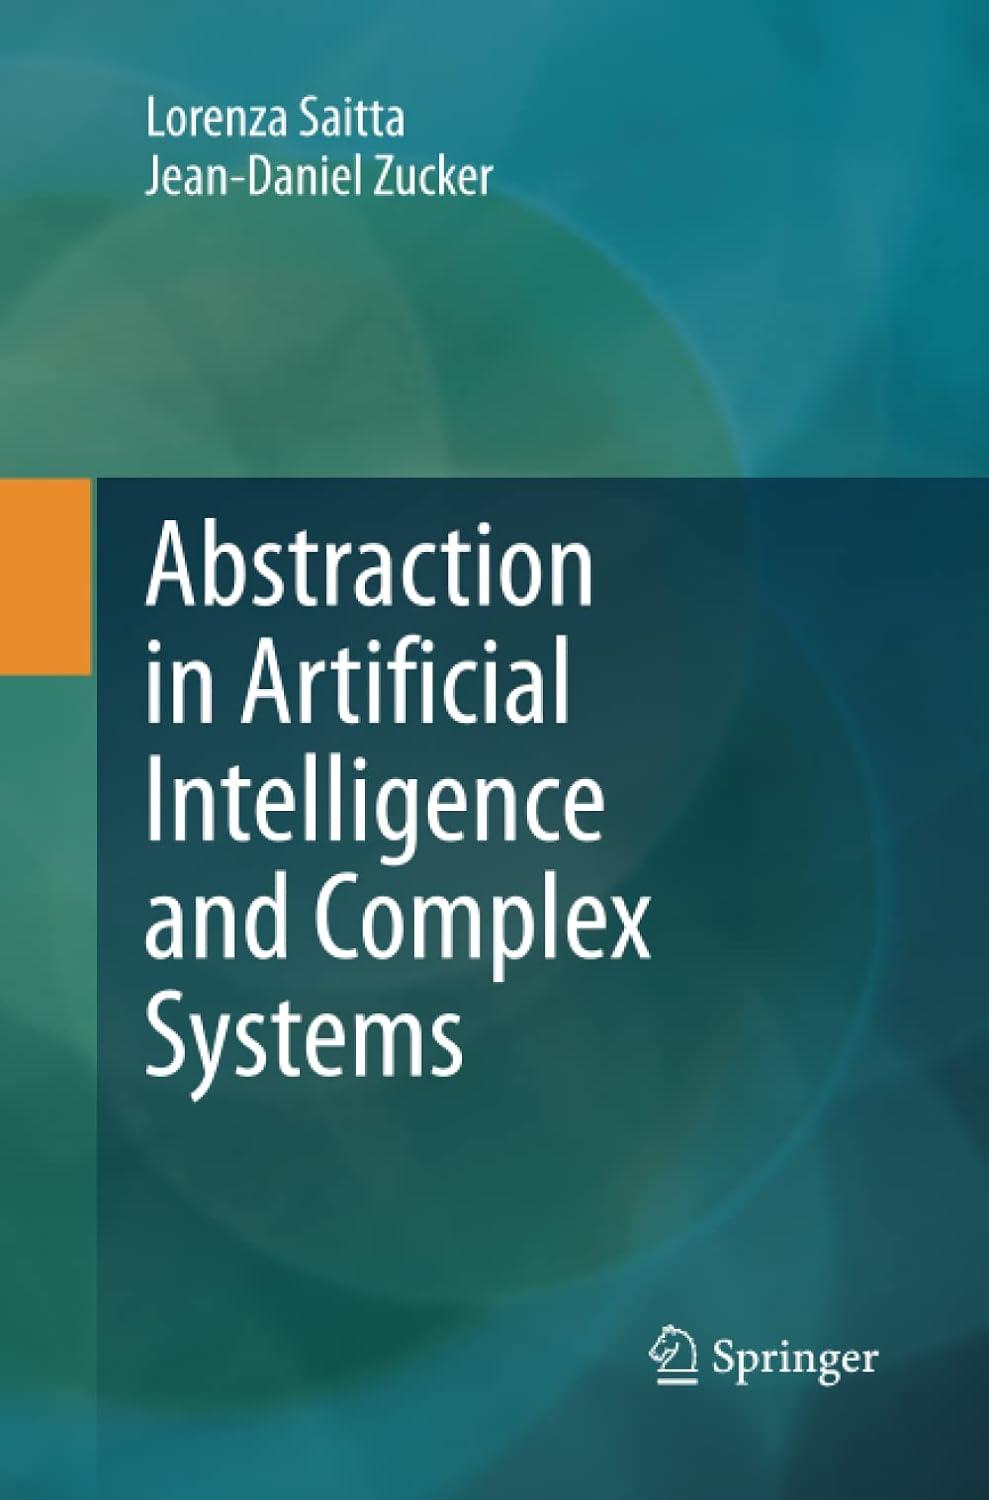 abstraction in artificial intelligence and complex systems 1st edition lorenza saitta , jean-daniel zucker